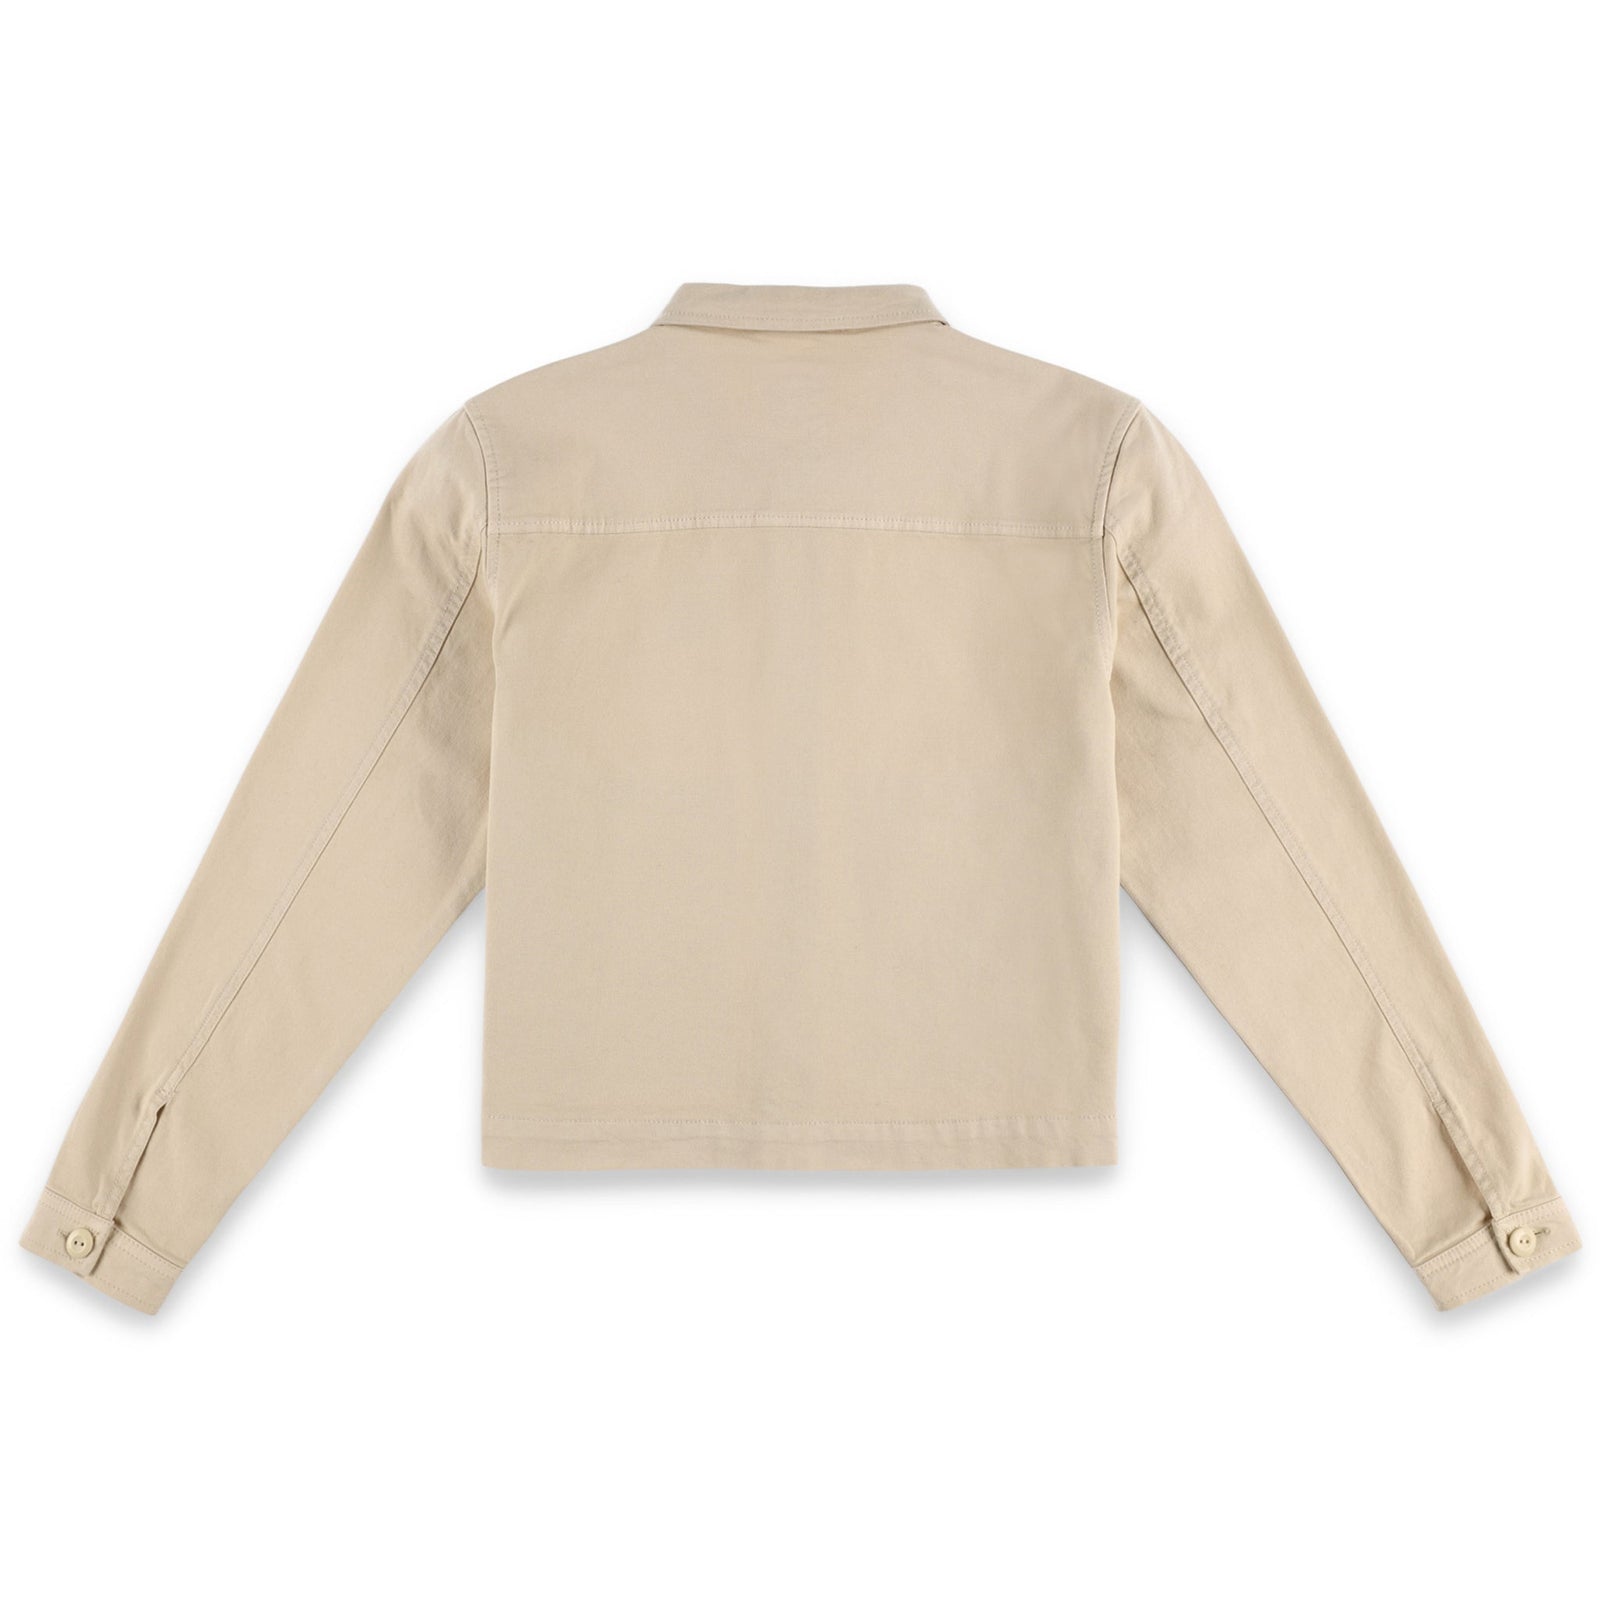 Back of Topo Designs Women's Dirt Jacket 100% organic cotton shirt jacket in "sand" brown white